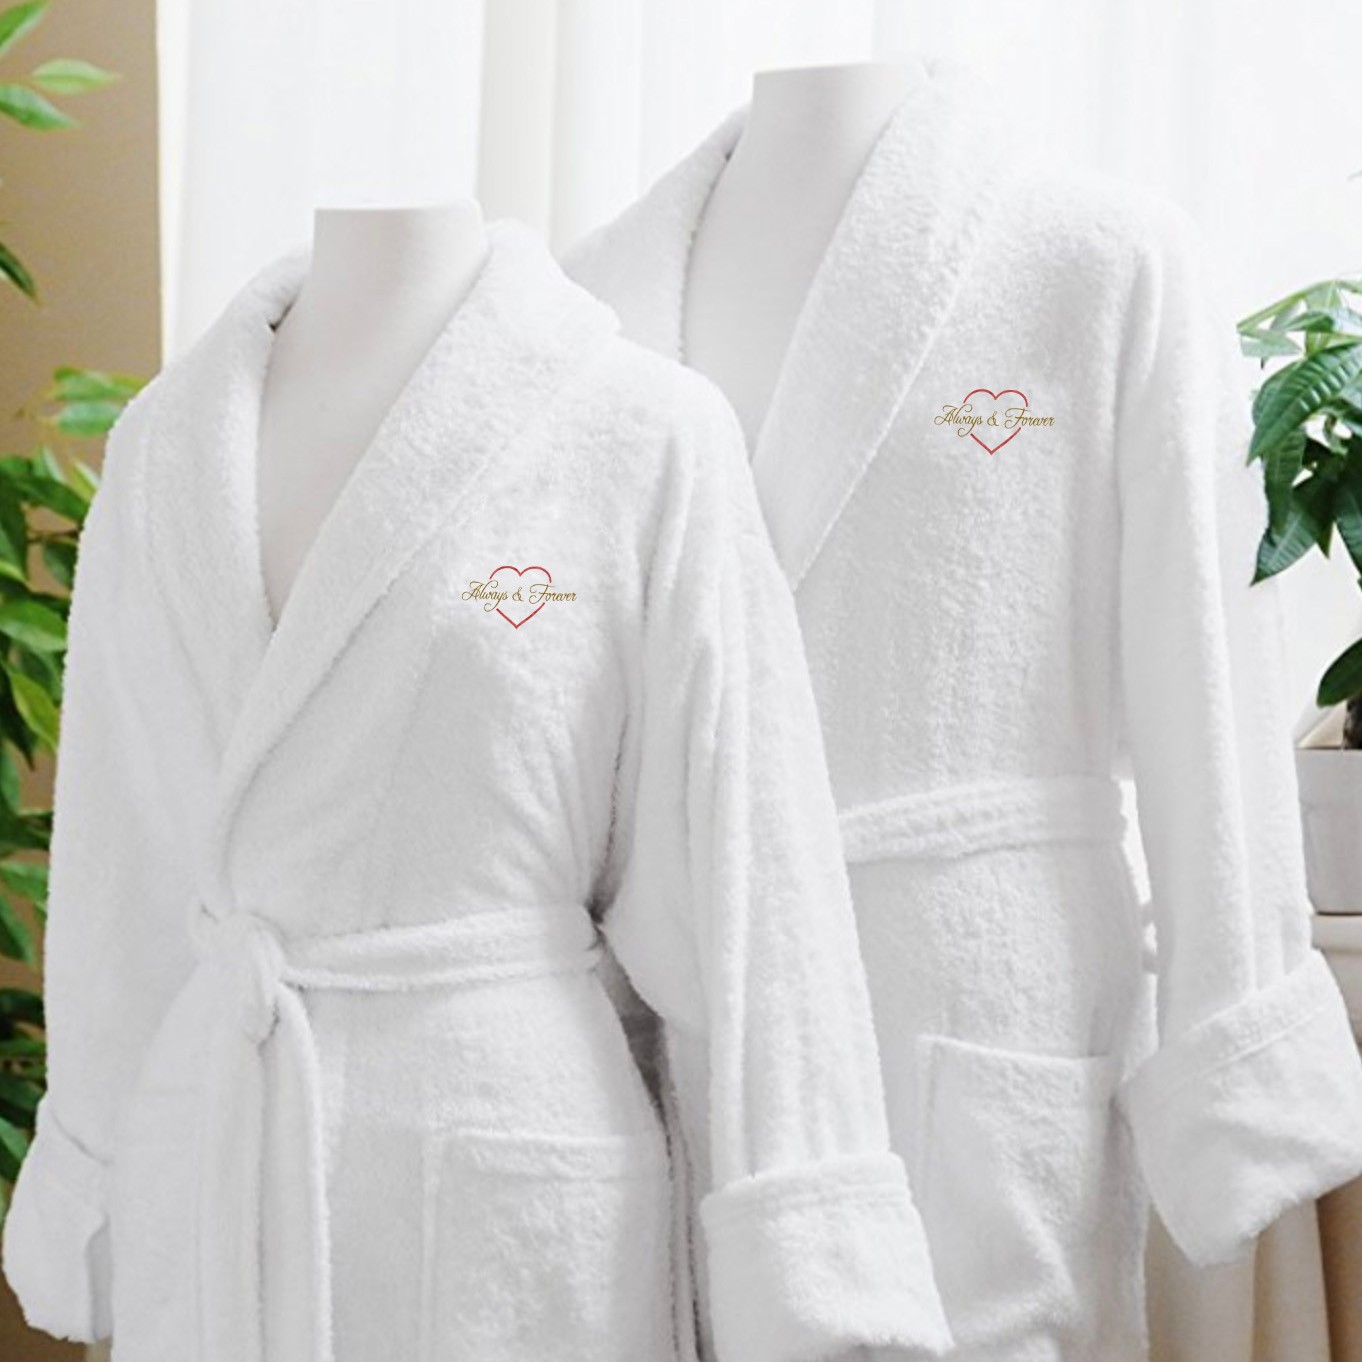 Банный халат Wedding цвет: белый (L), размер L pve886772 Банный халат Wedding цвет: белый (L) - фото 1